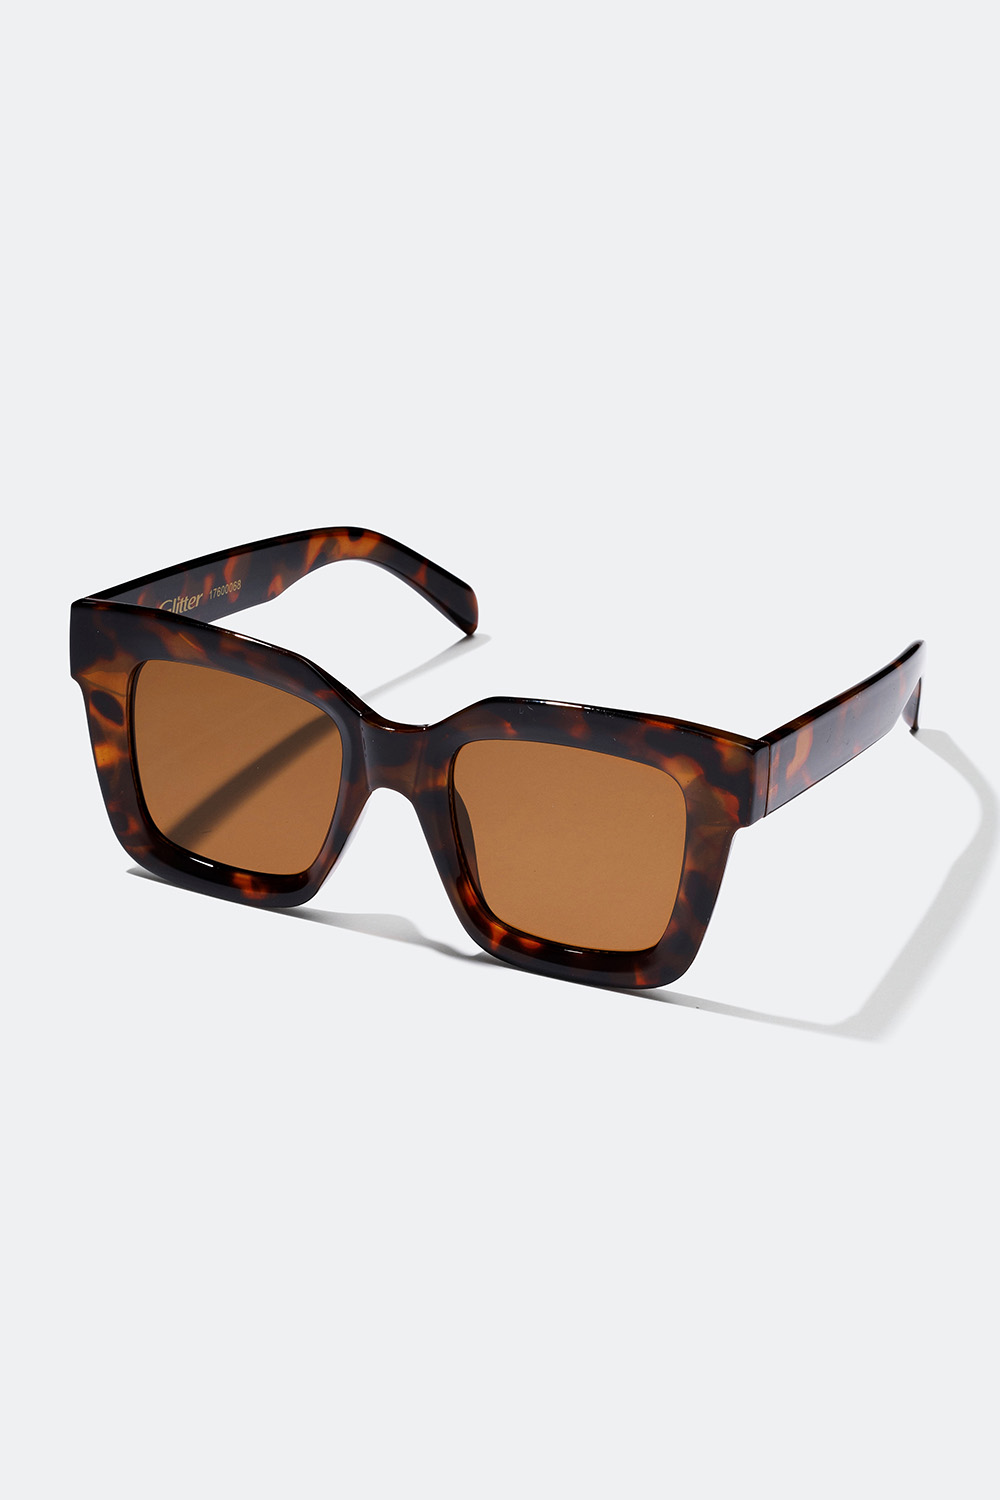 Store, brune solbriller med firkantet design i gruppen Solbriller hos Glitter (176000680700)